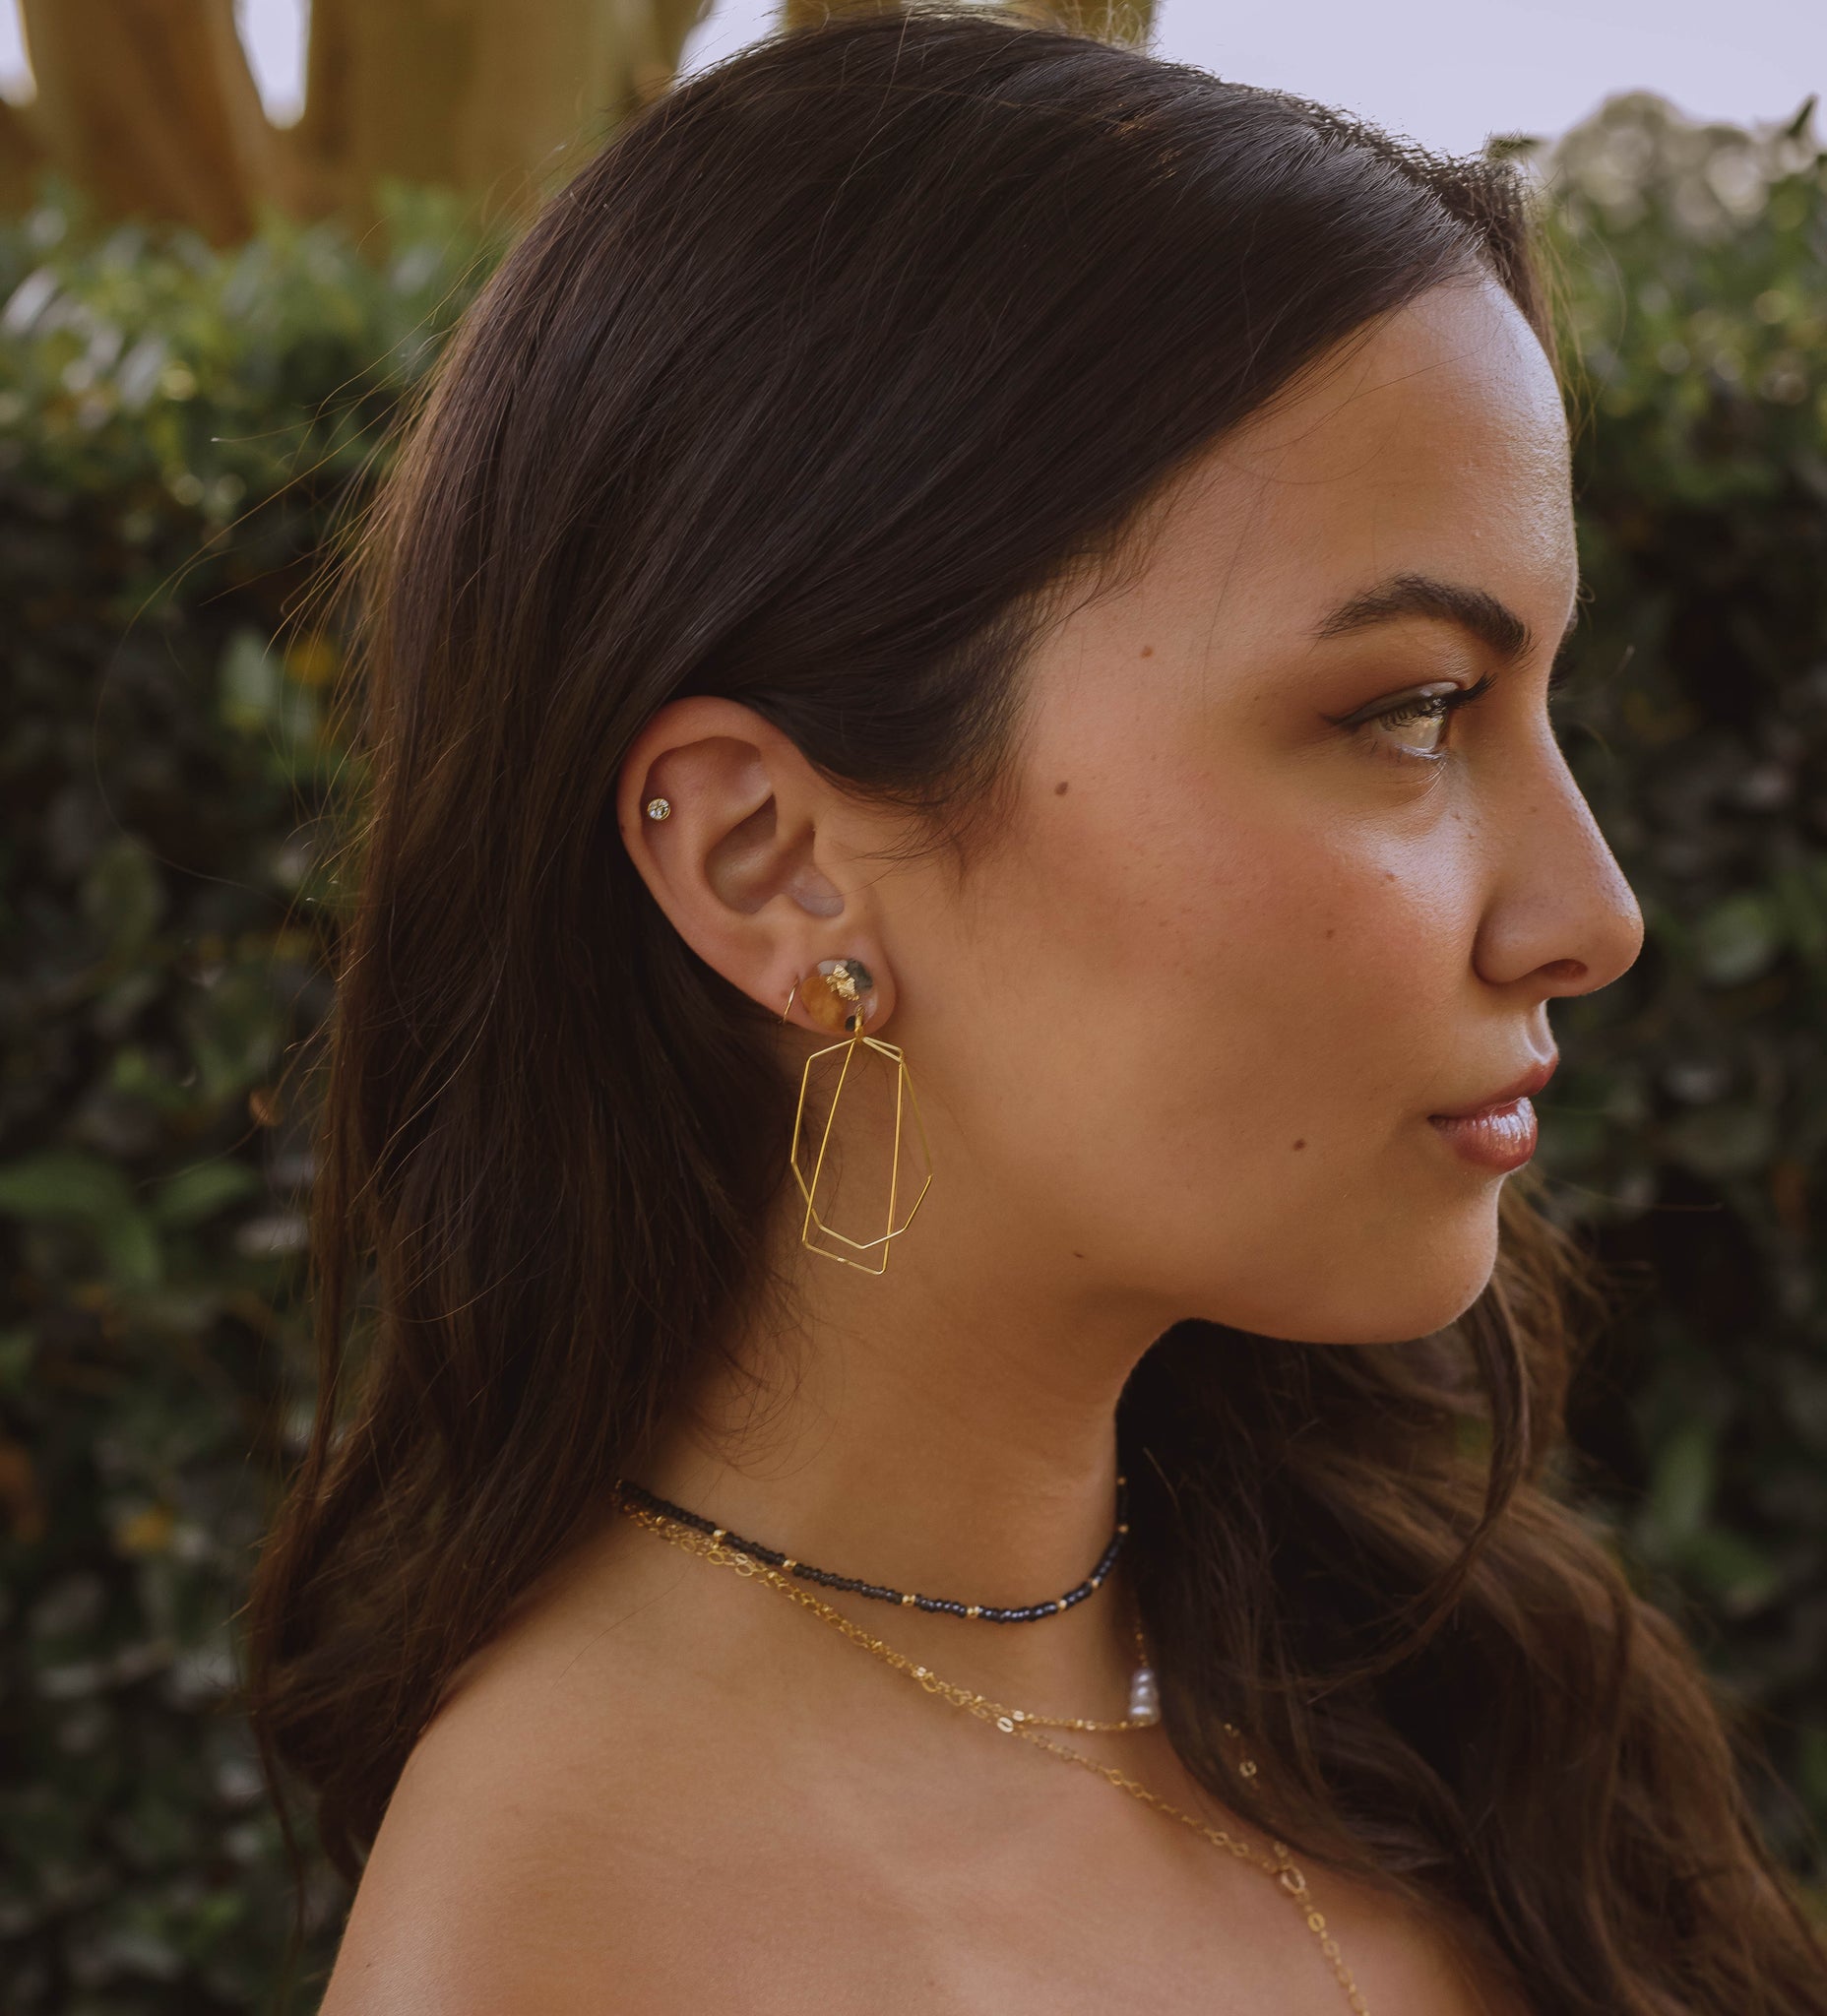 Shapes earrings